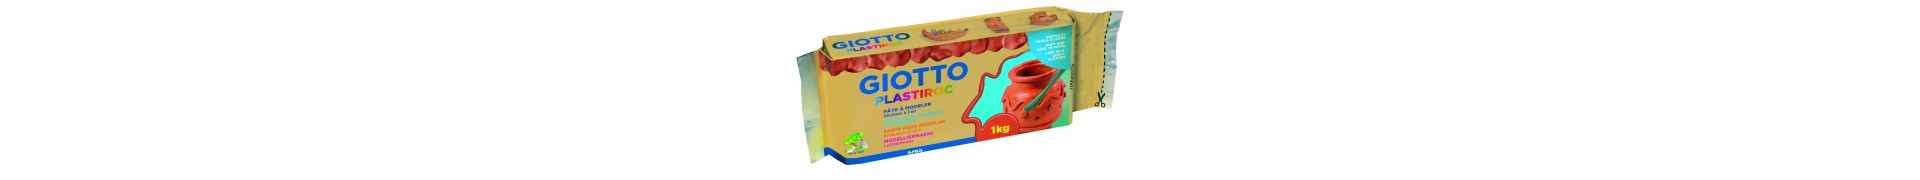 Pâte à modeler GIOTTO Plastiroc - Pain:1 kg - Terracotta 685600 